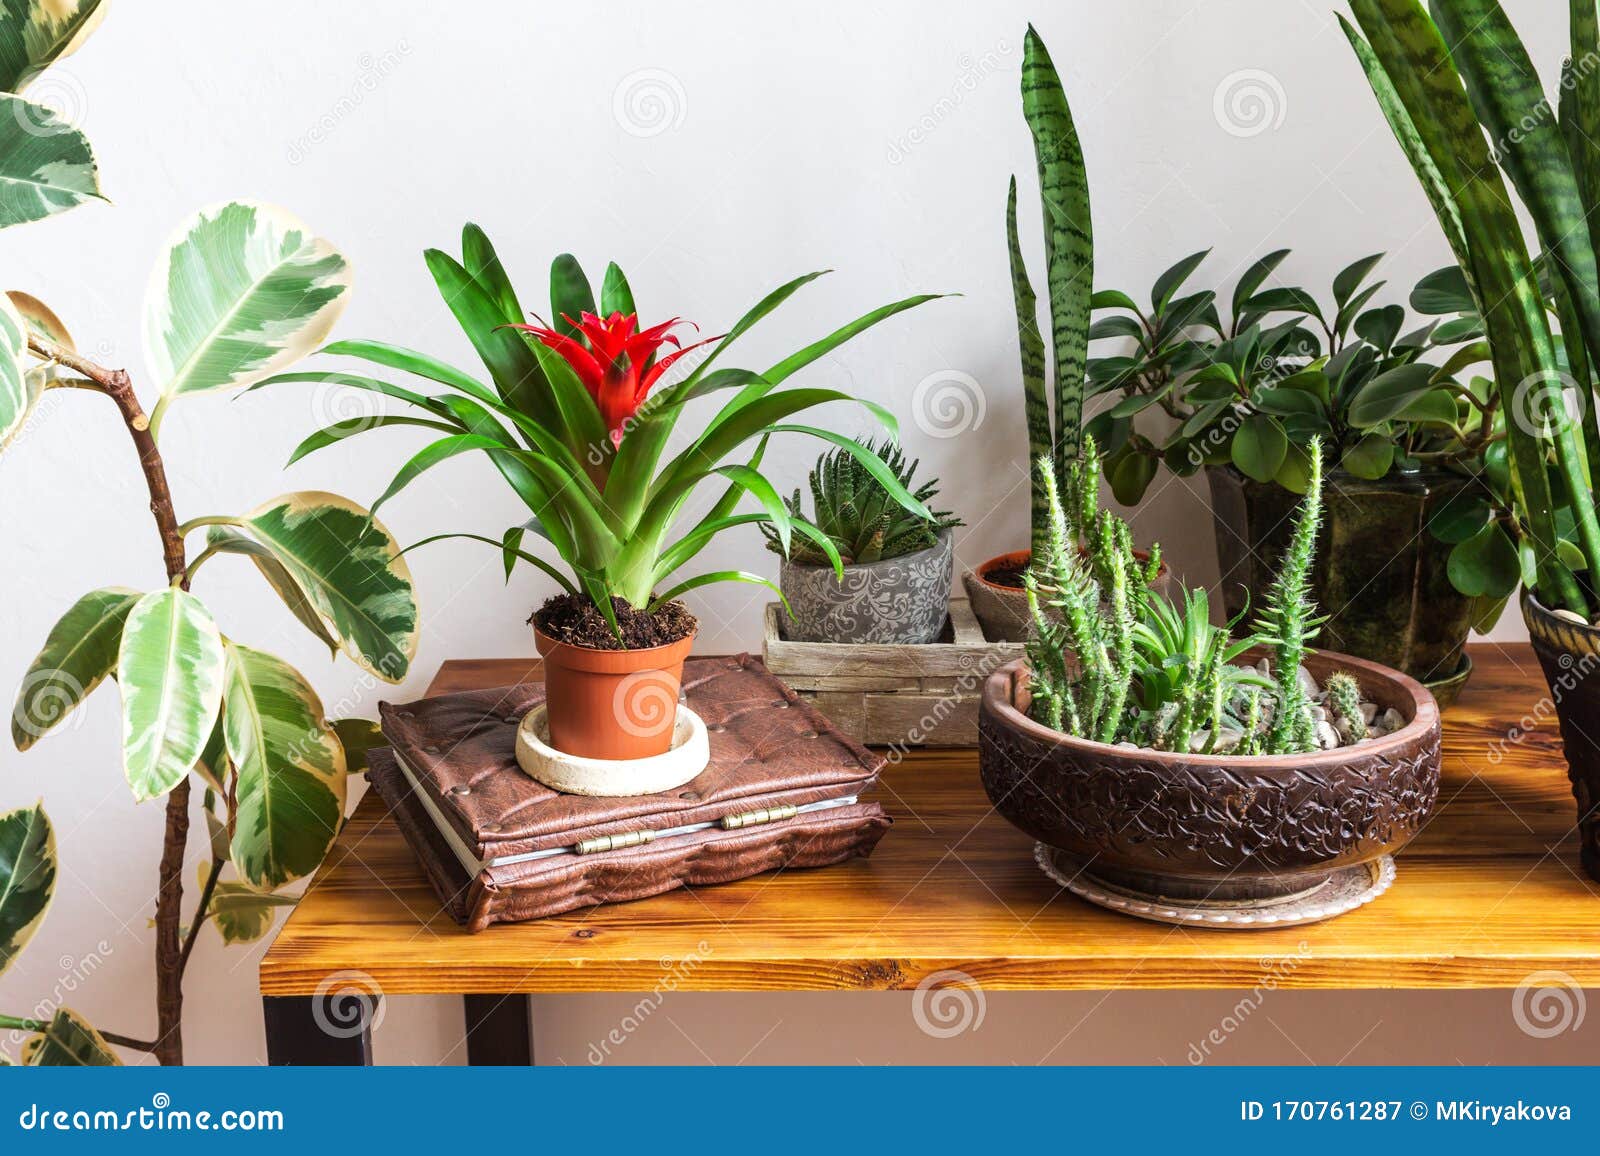 houseplants on wooden desk in stylish interior.